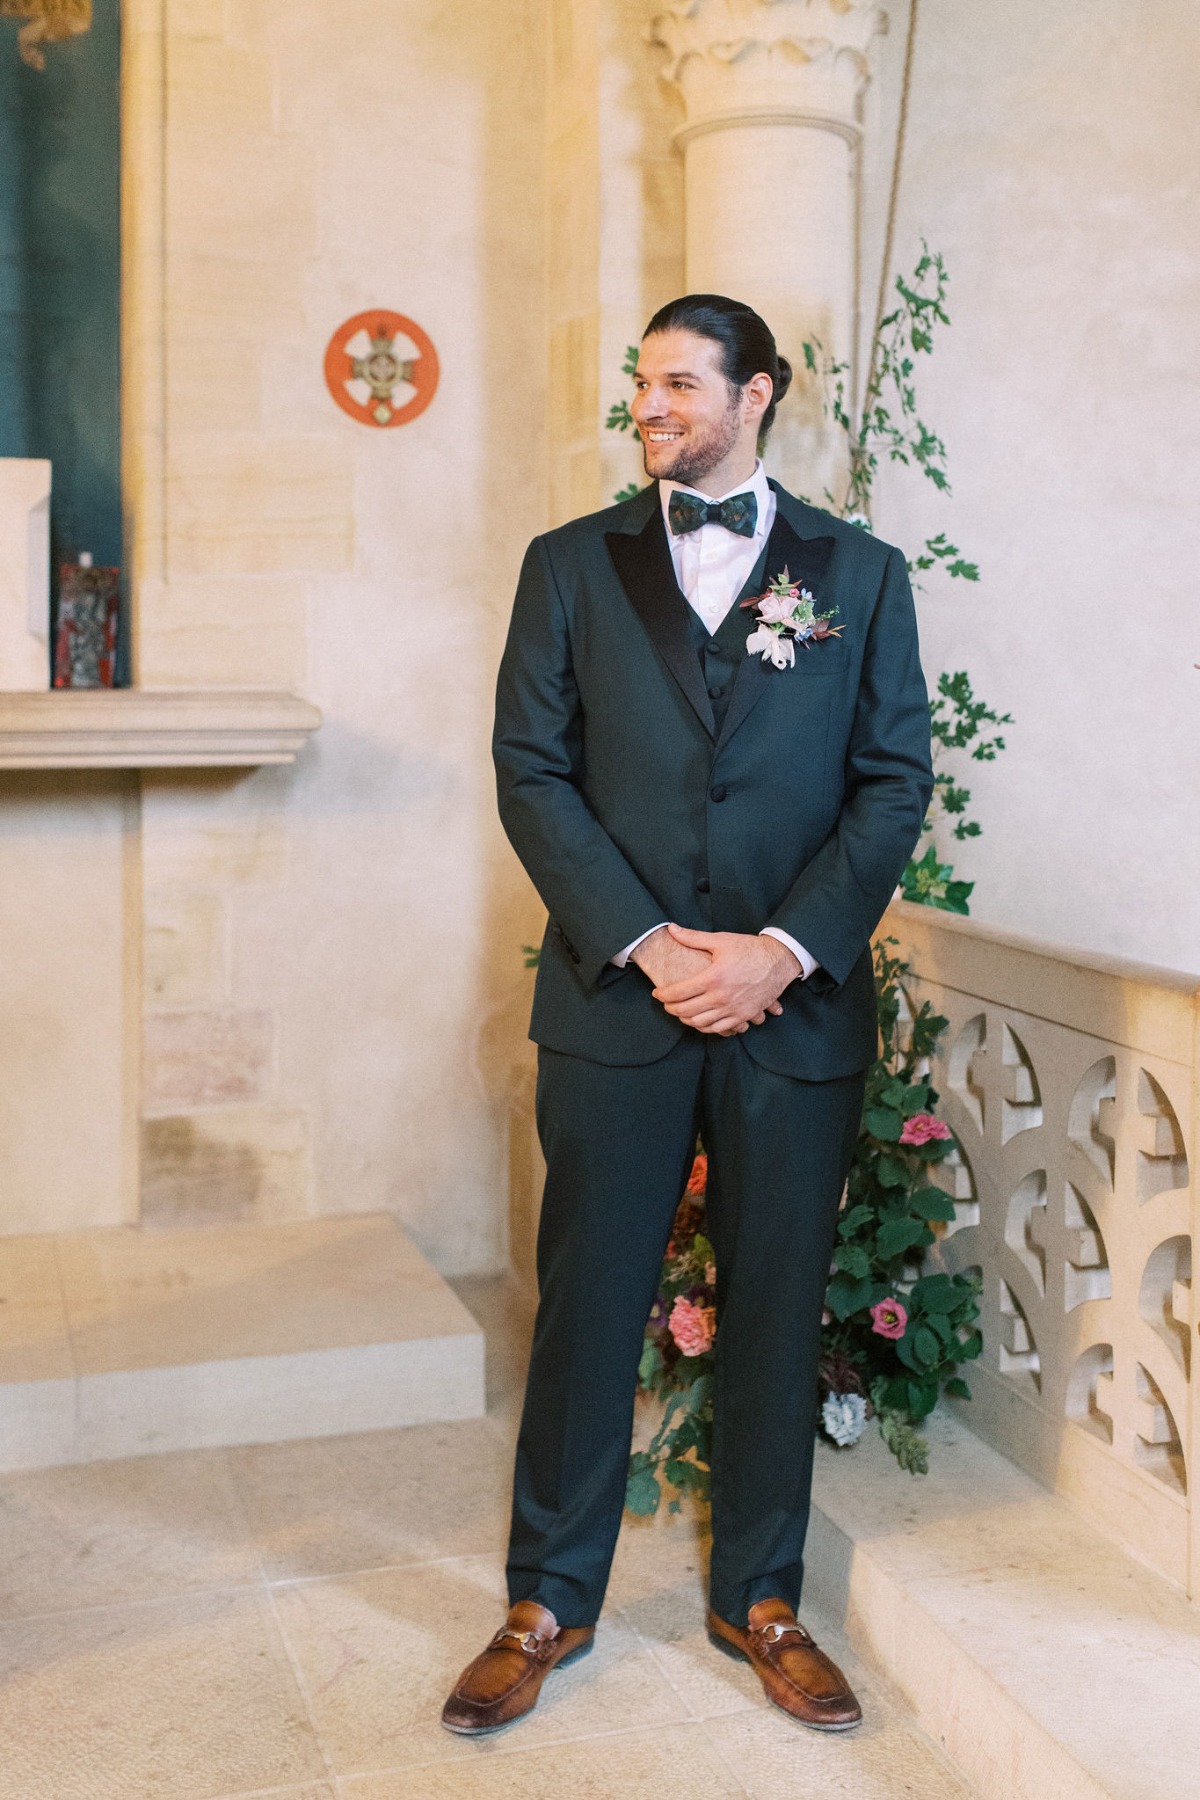 Stylish groom at French destination wedding